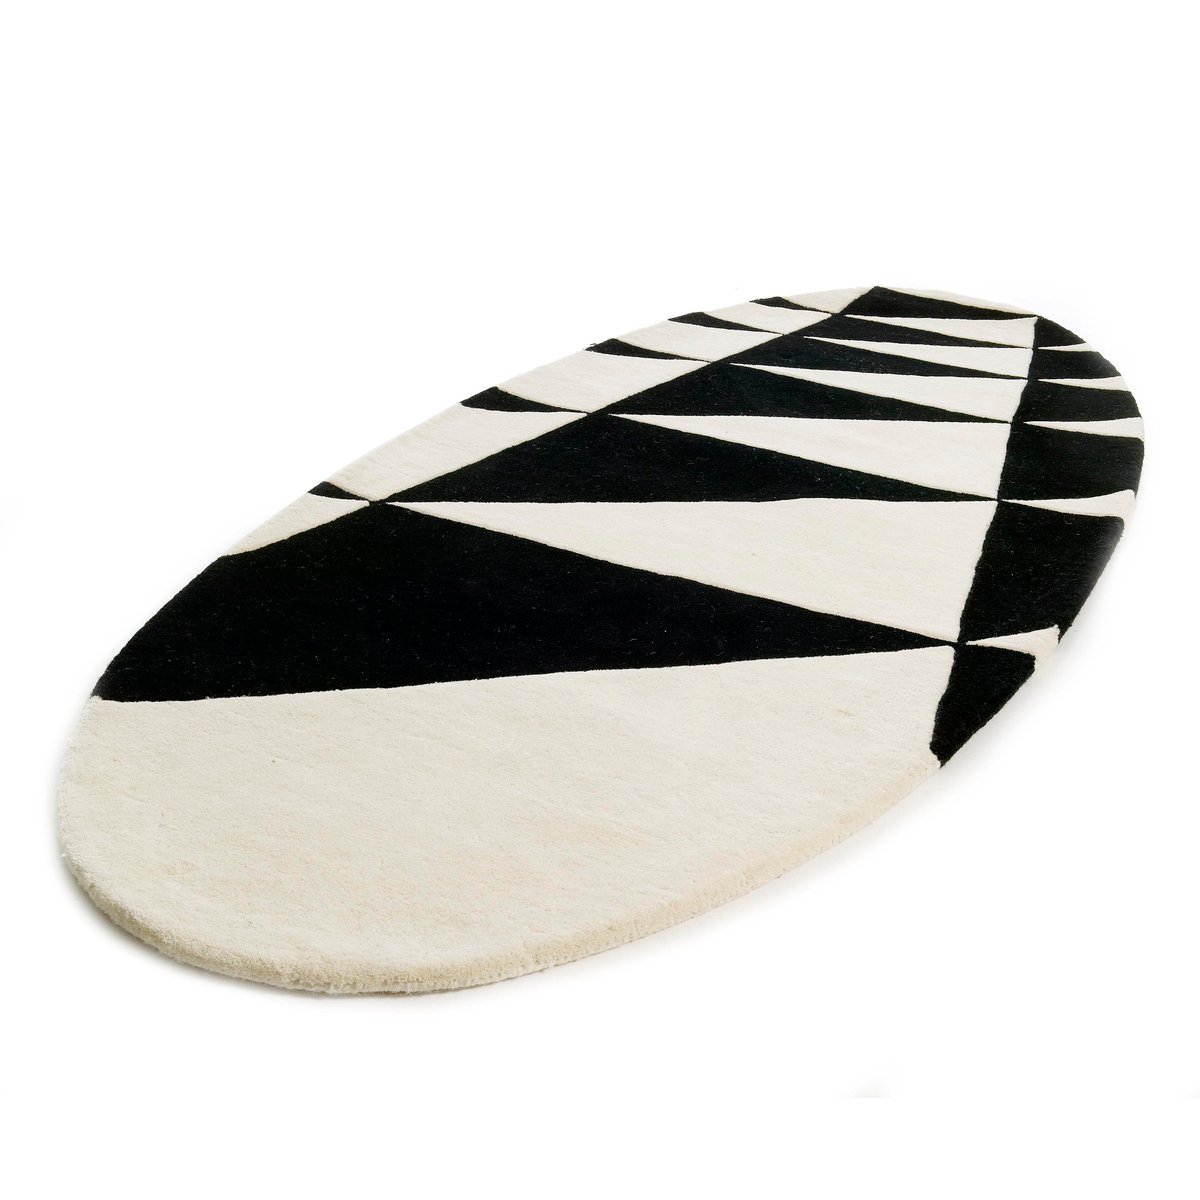 Etol Design Stockhol tapijt rond ovaalvormig 90x200cm